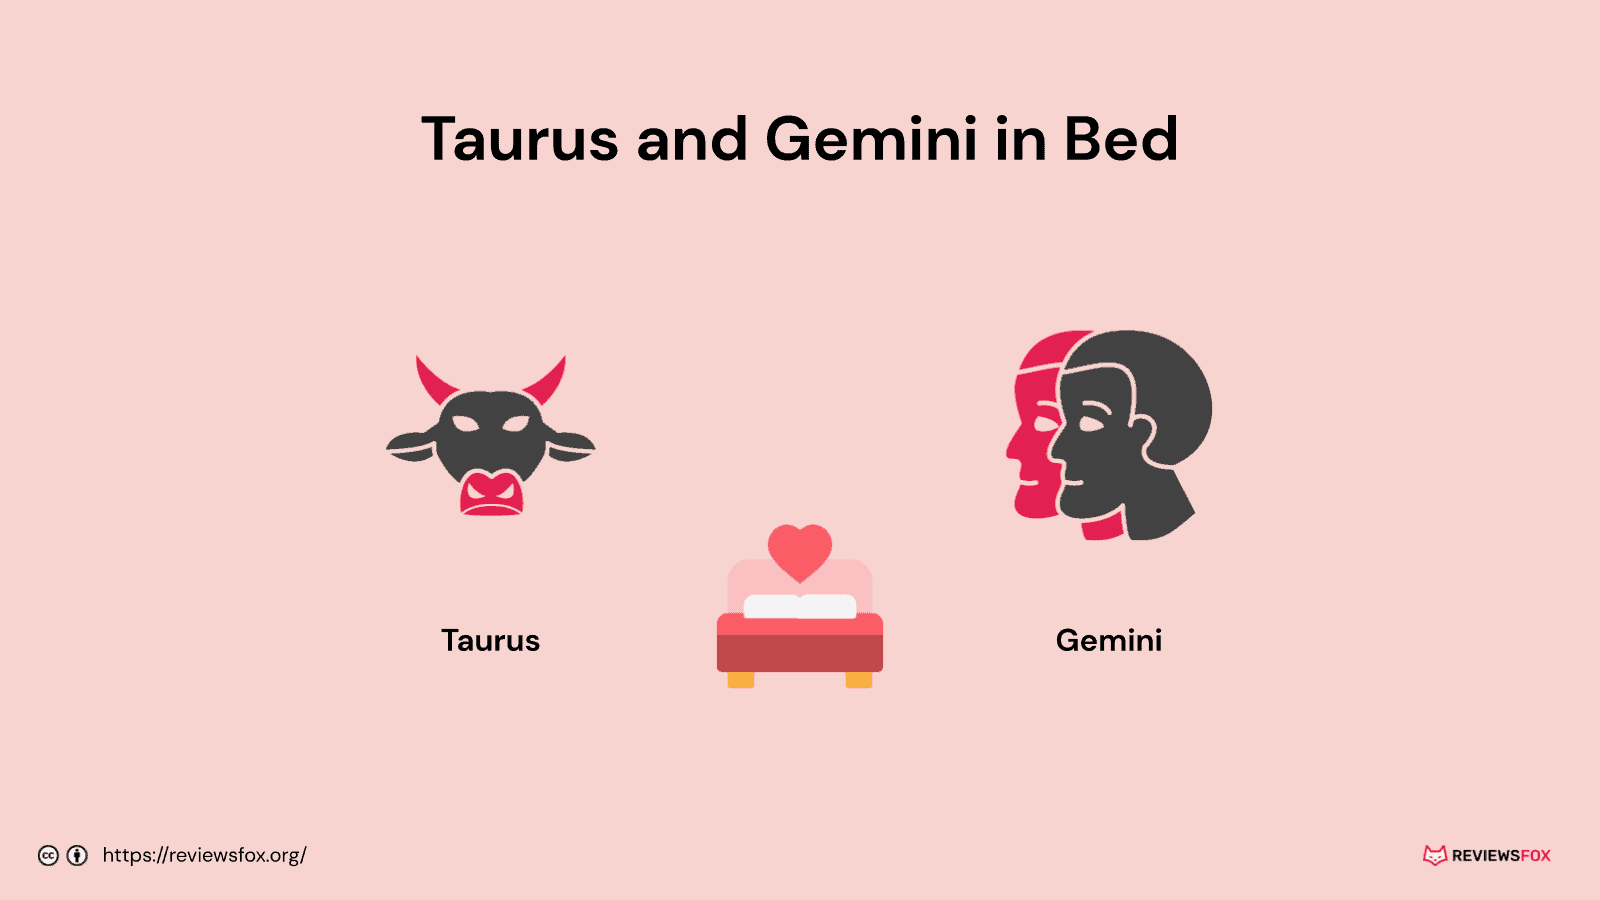 Taurus and Gemini in bed